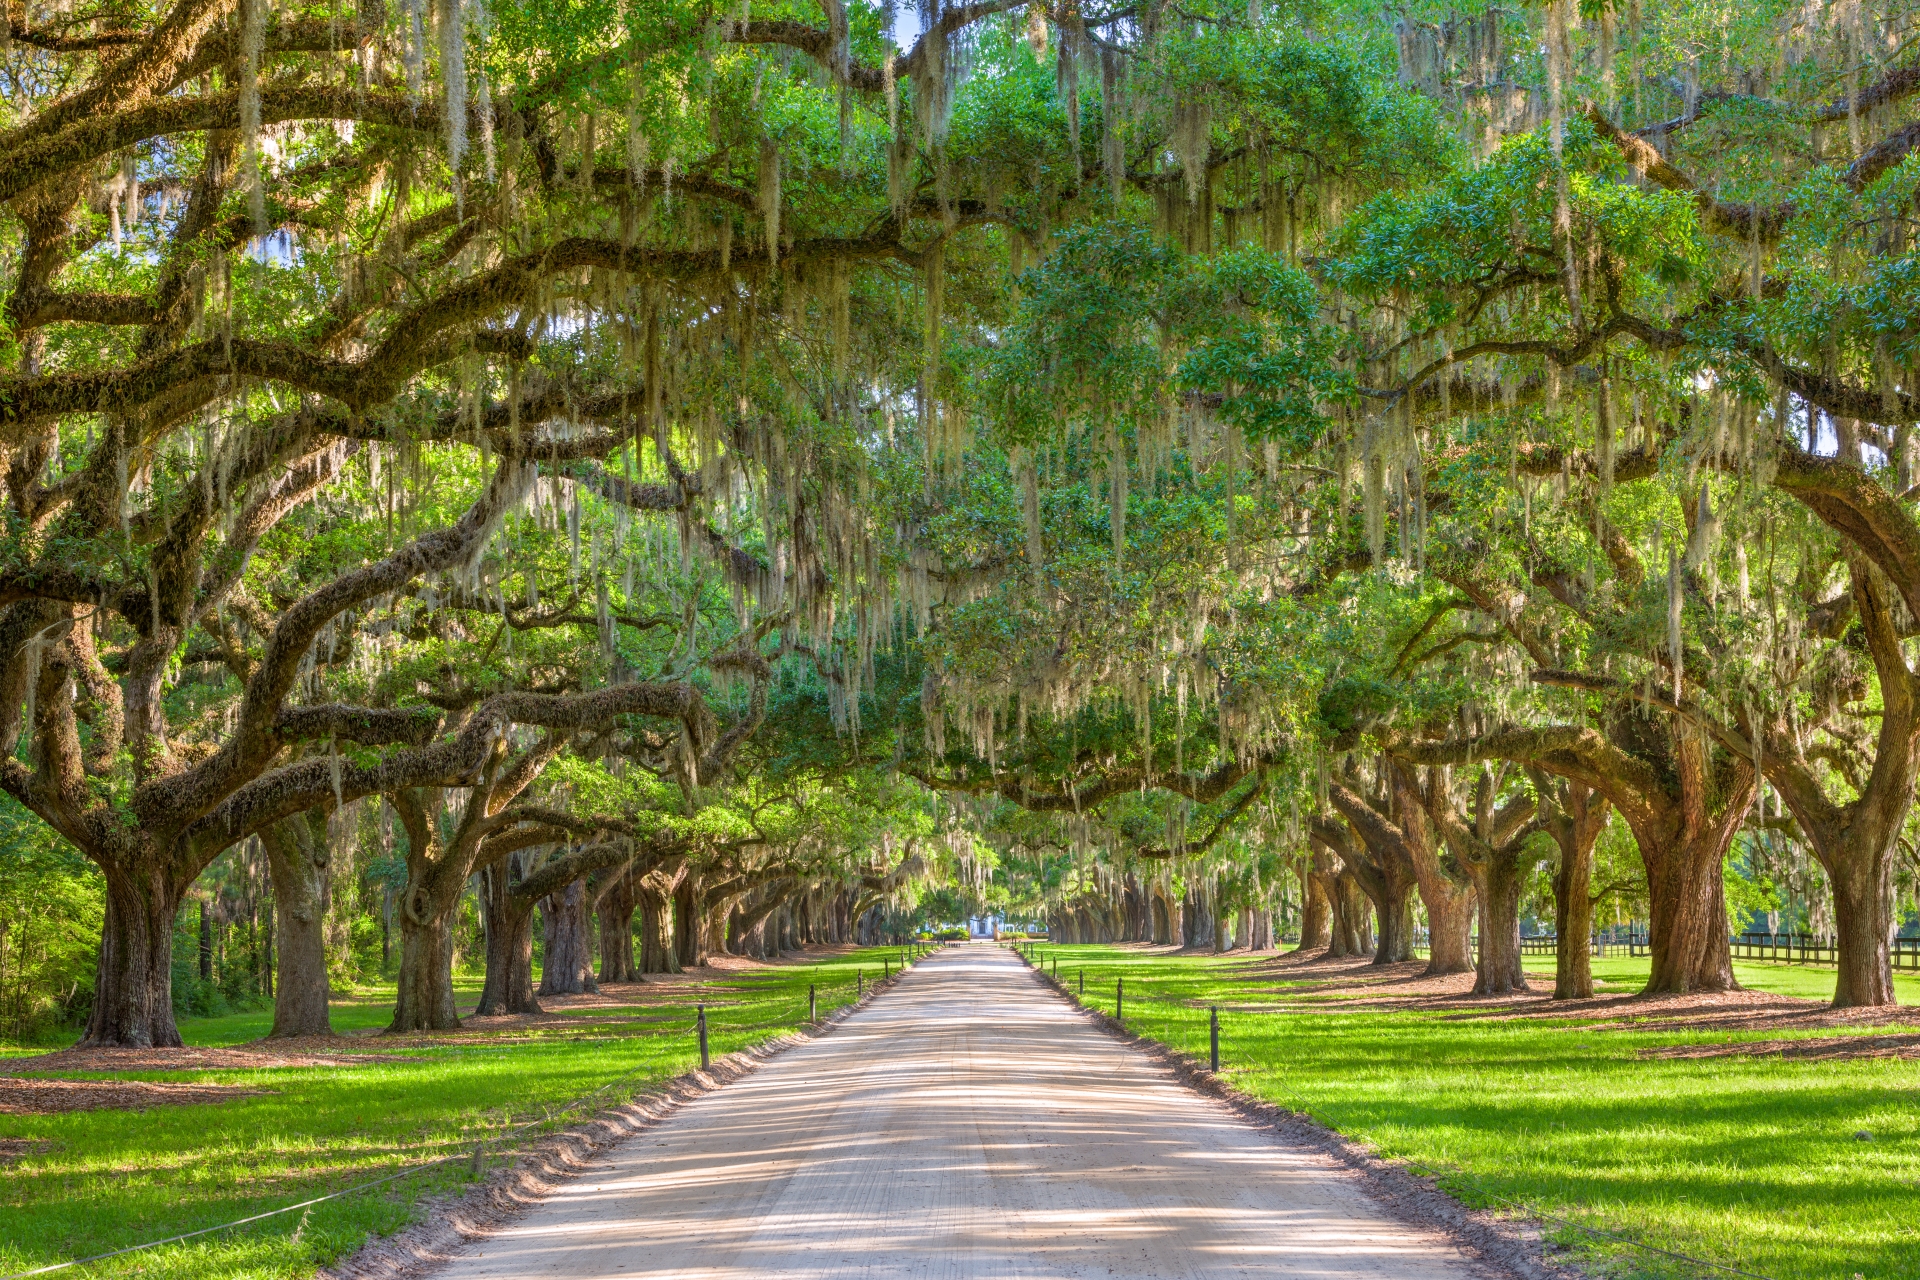 USA tree lined plantation entrance 